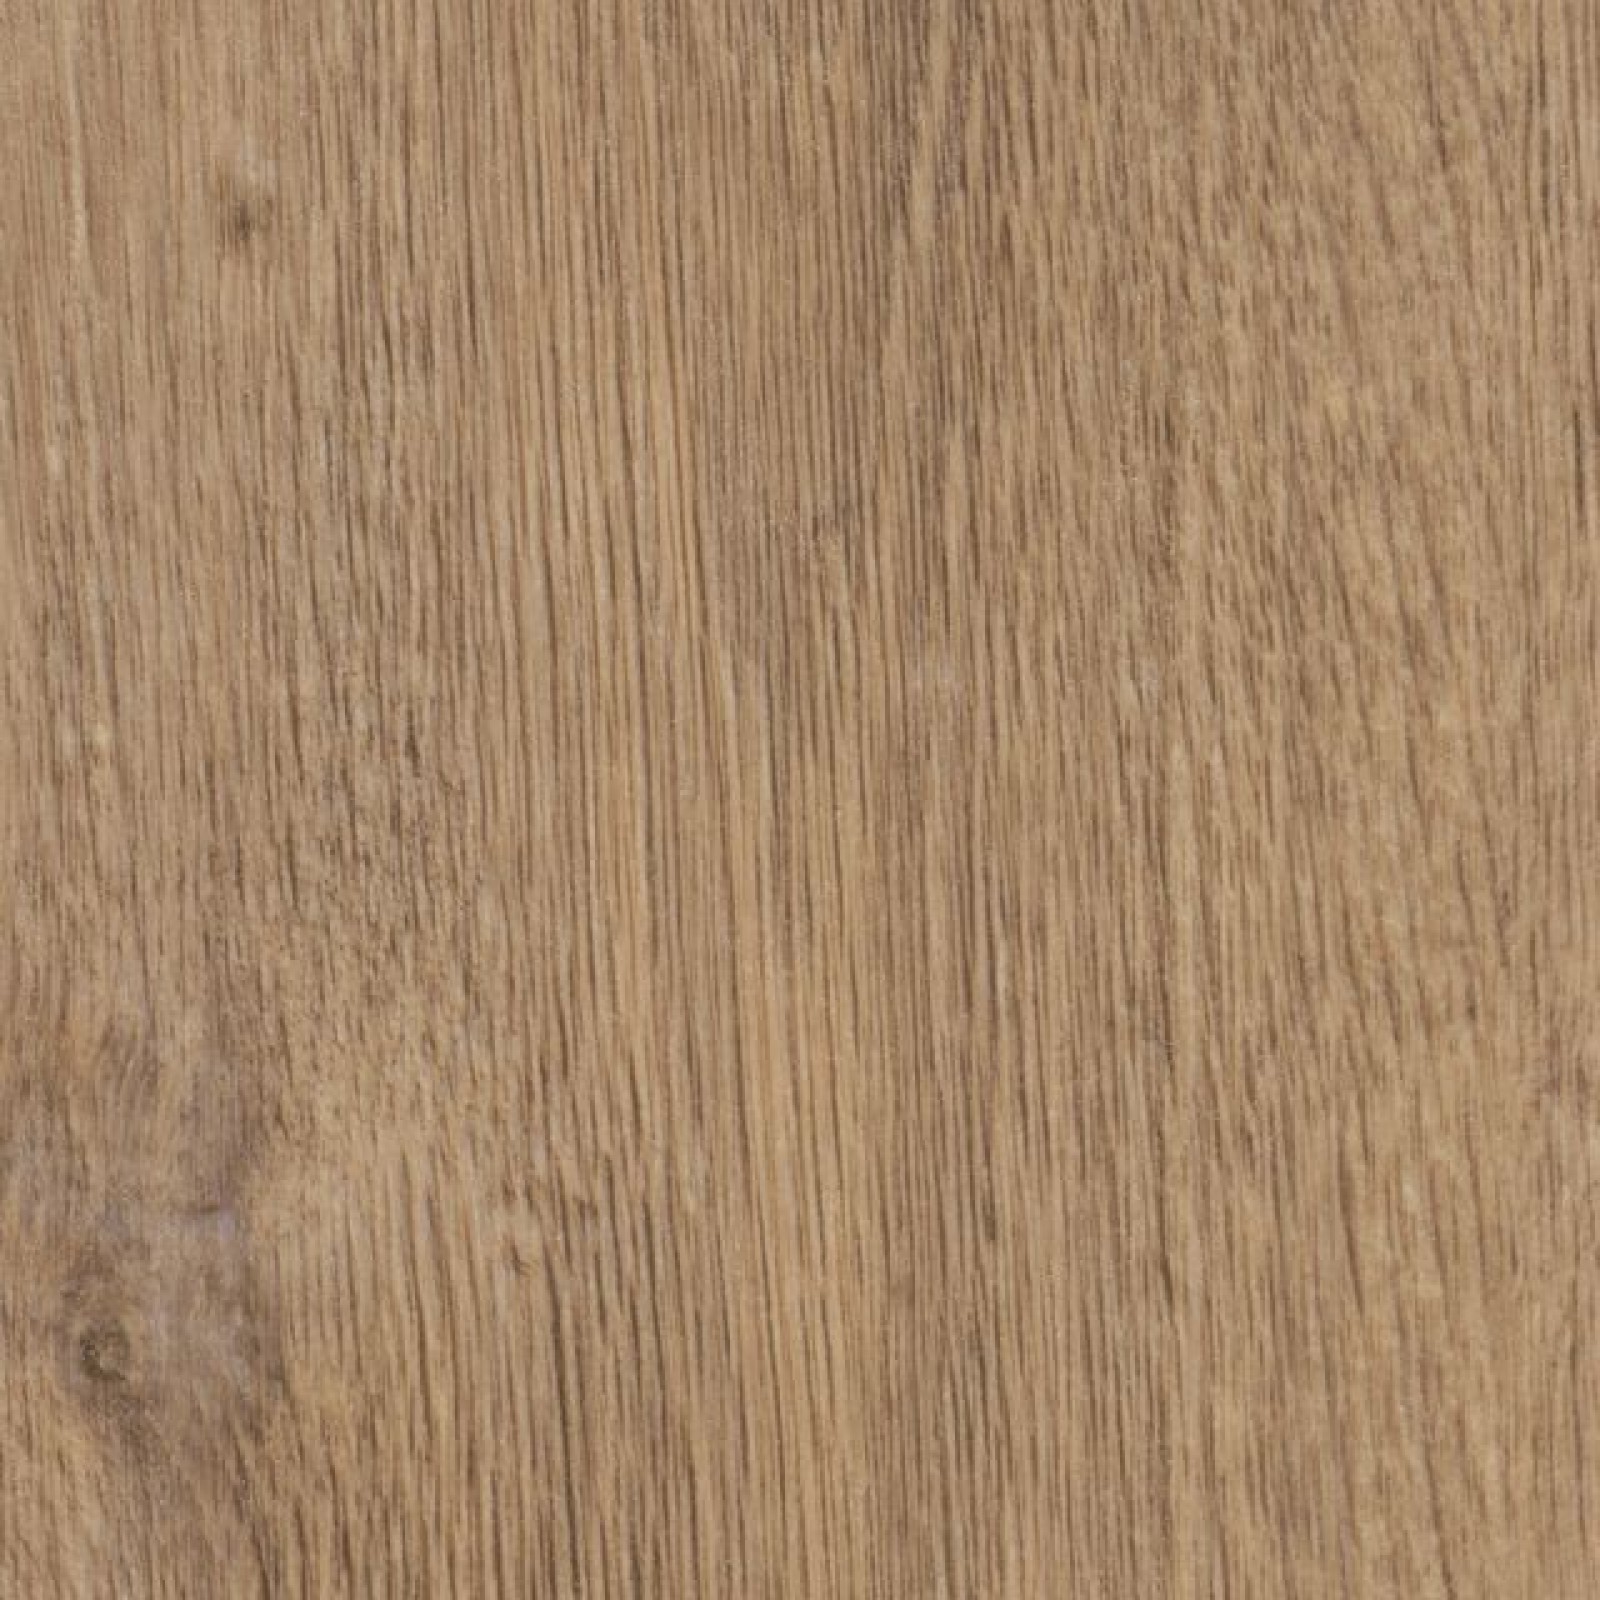 Vzor - 60078 light rustic oak